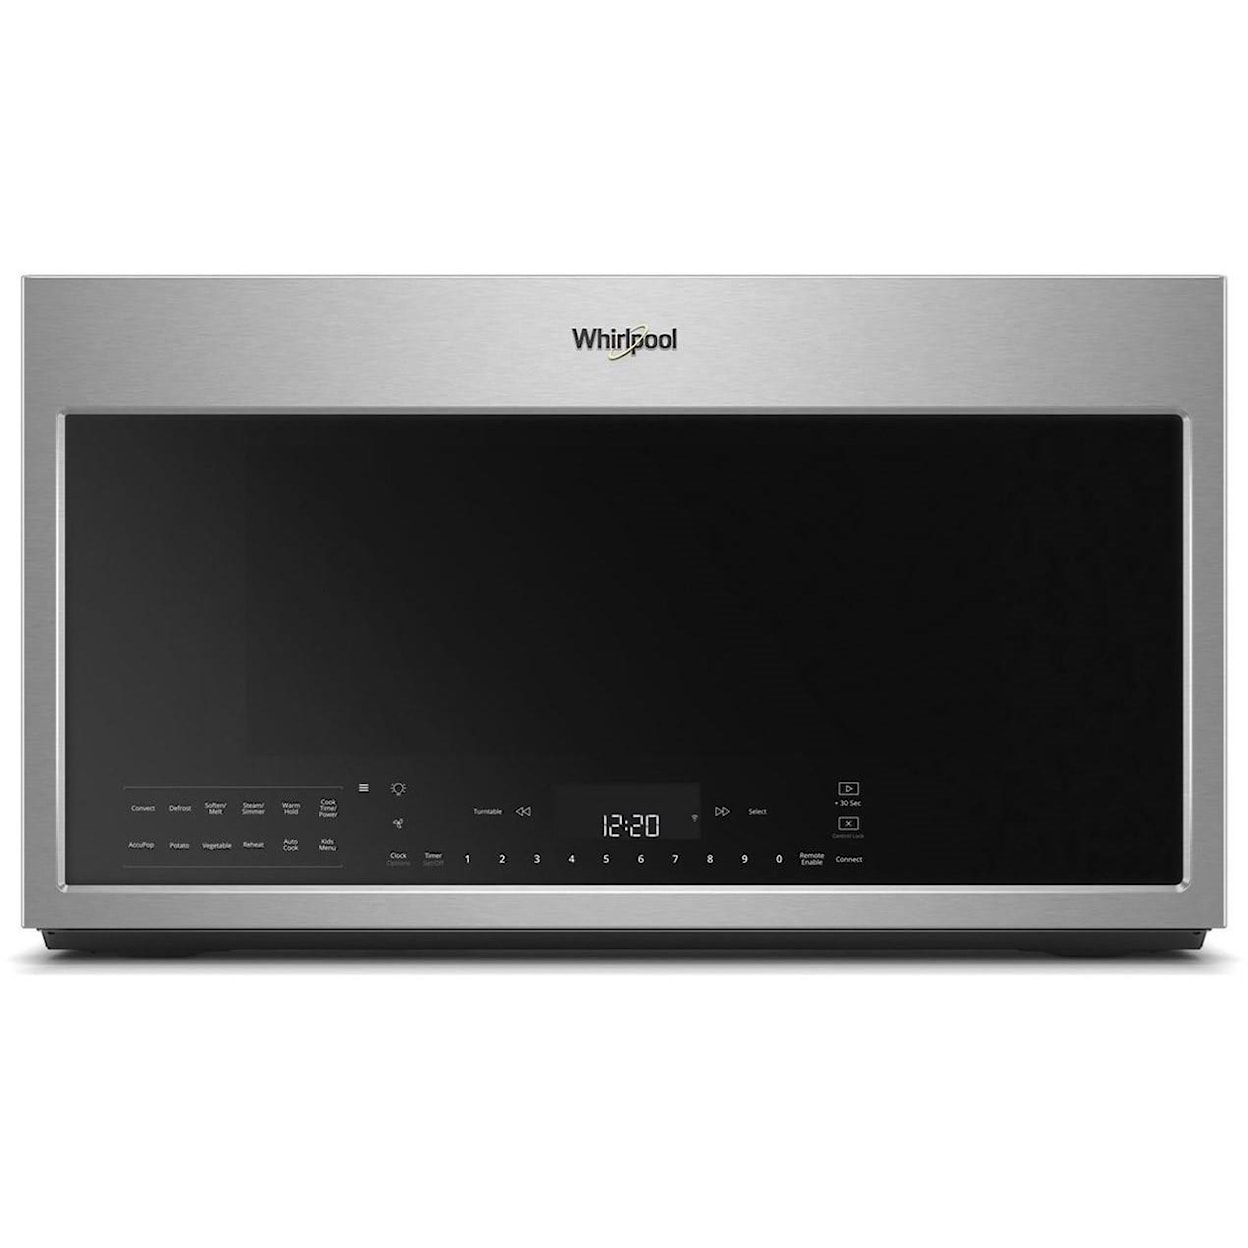 Whirlpool Microwaves- Whirlpool Smart 1.9 cu. ft. Over the Range Microwave